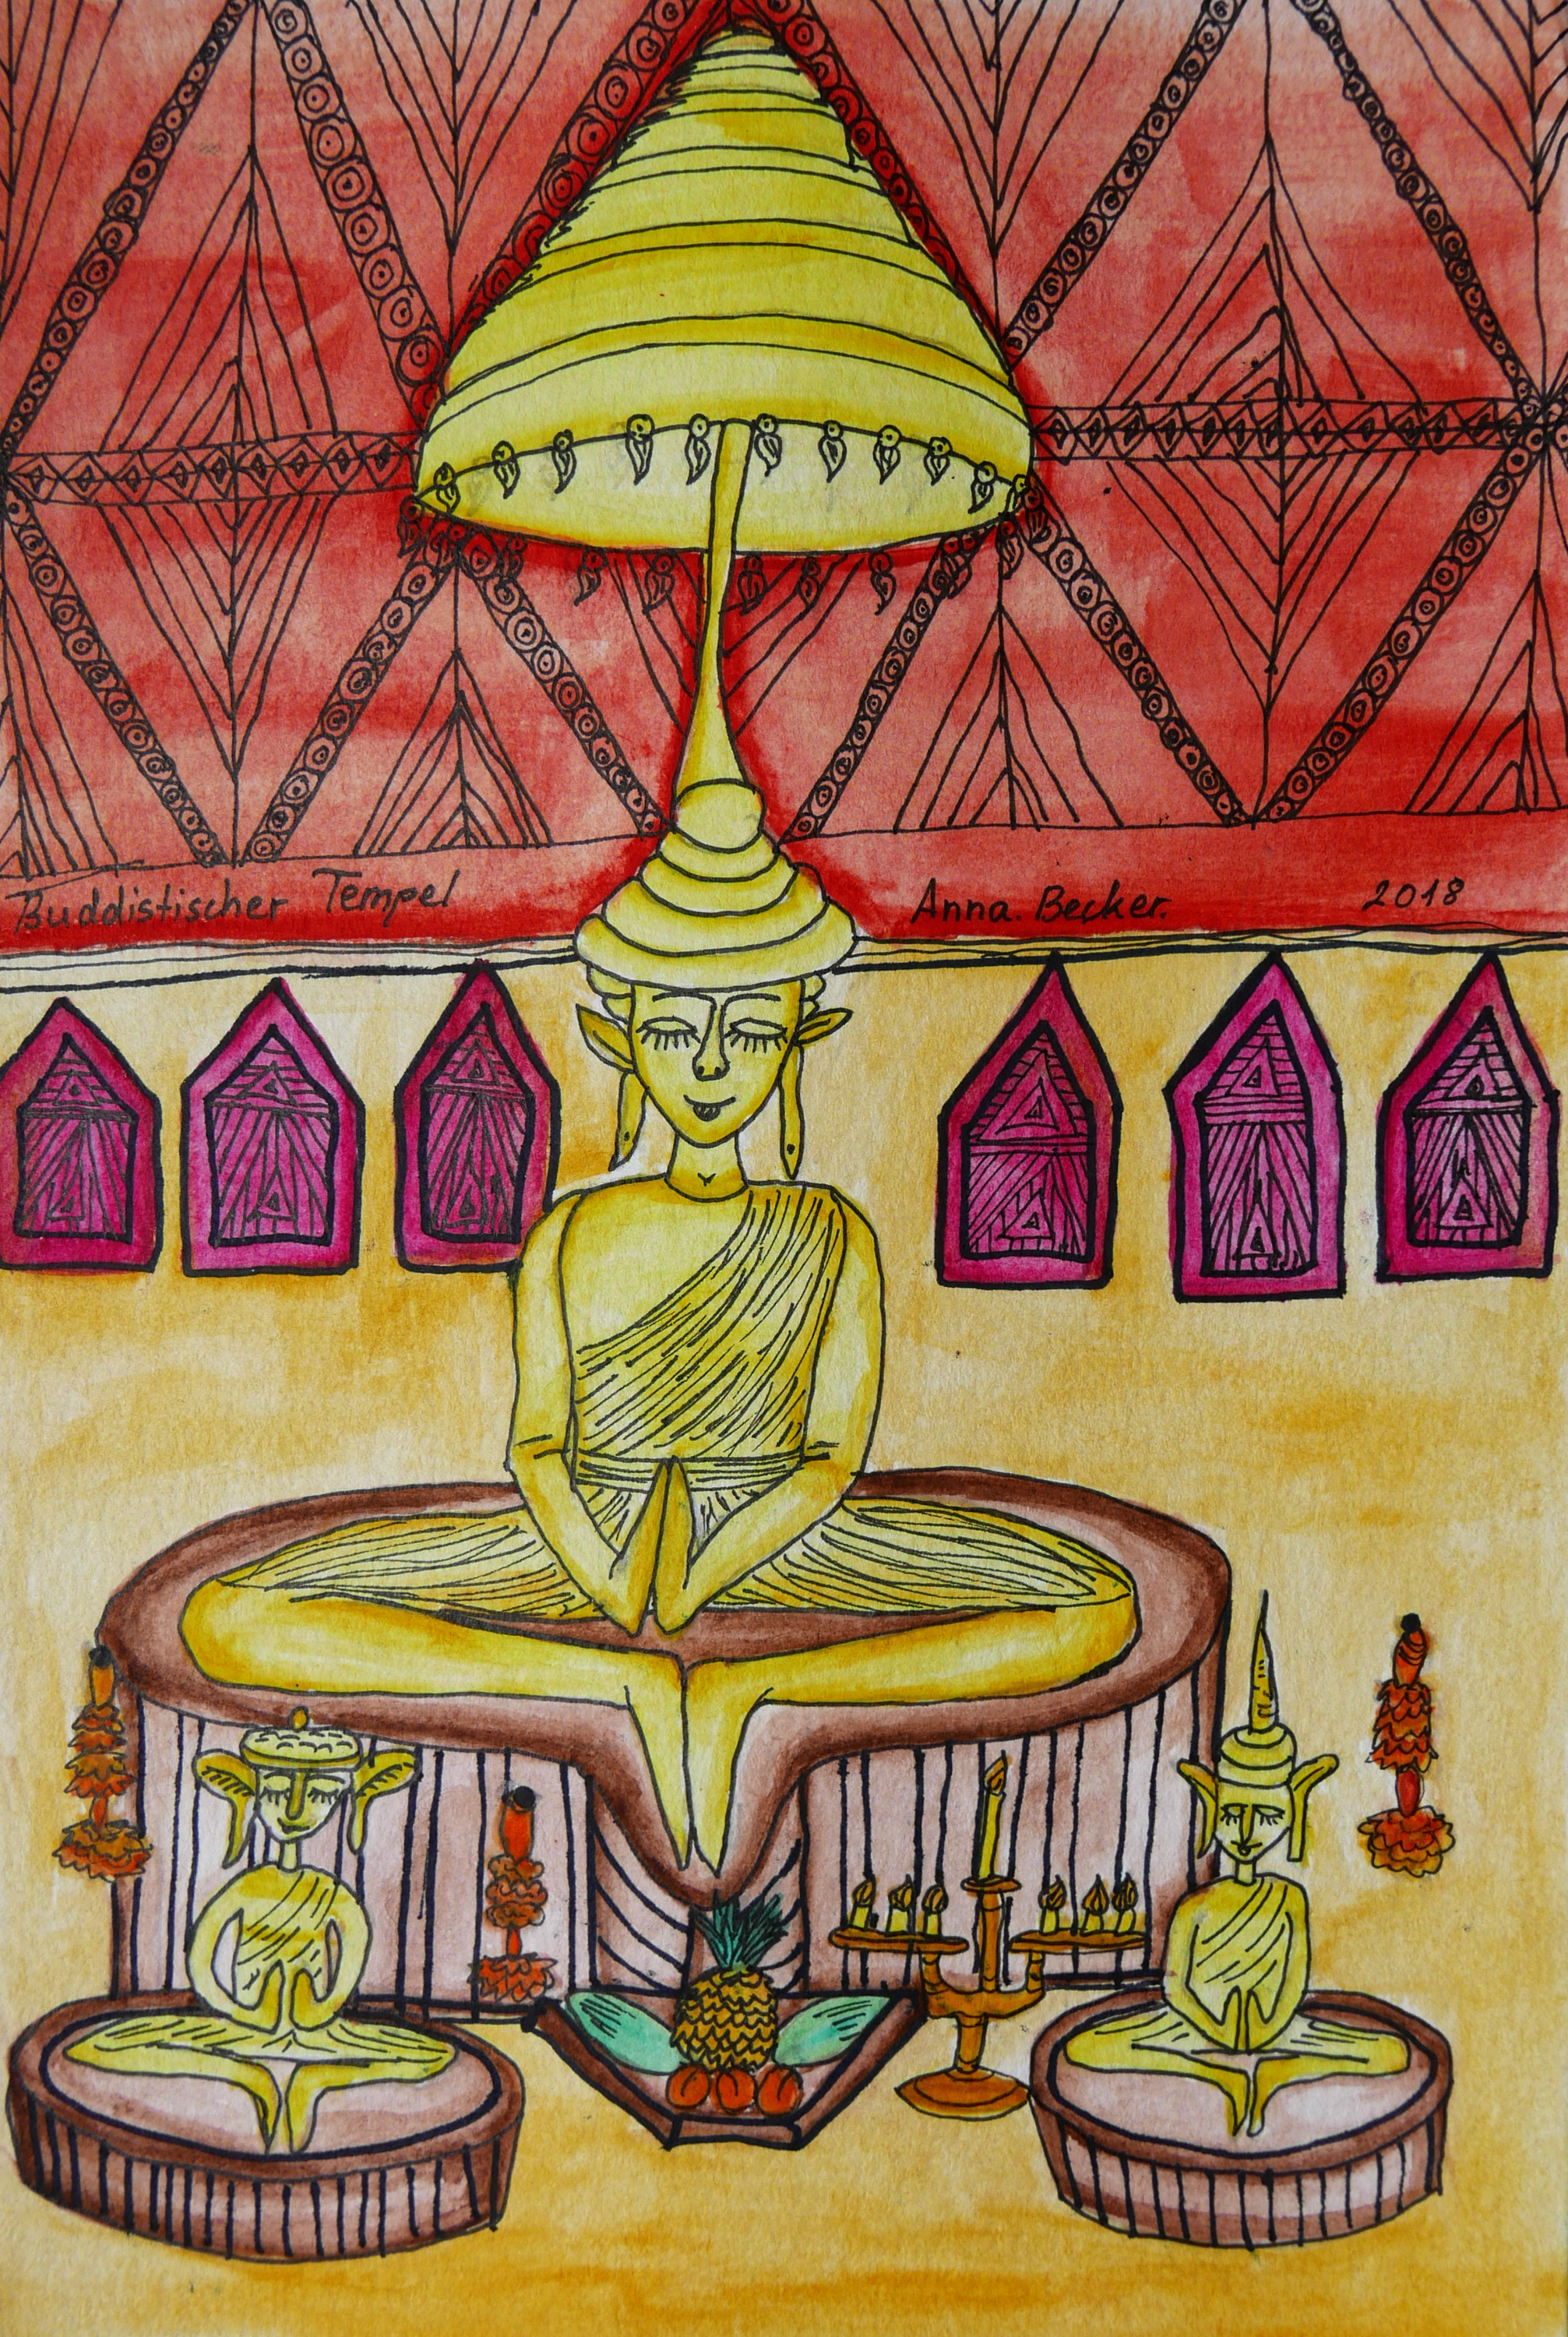 Thailand Bangkok Temple painted by Anna Becker